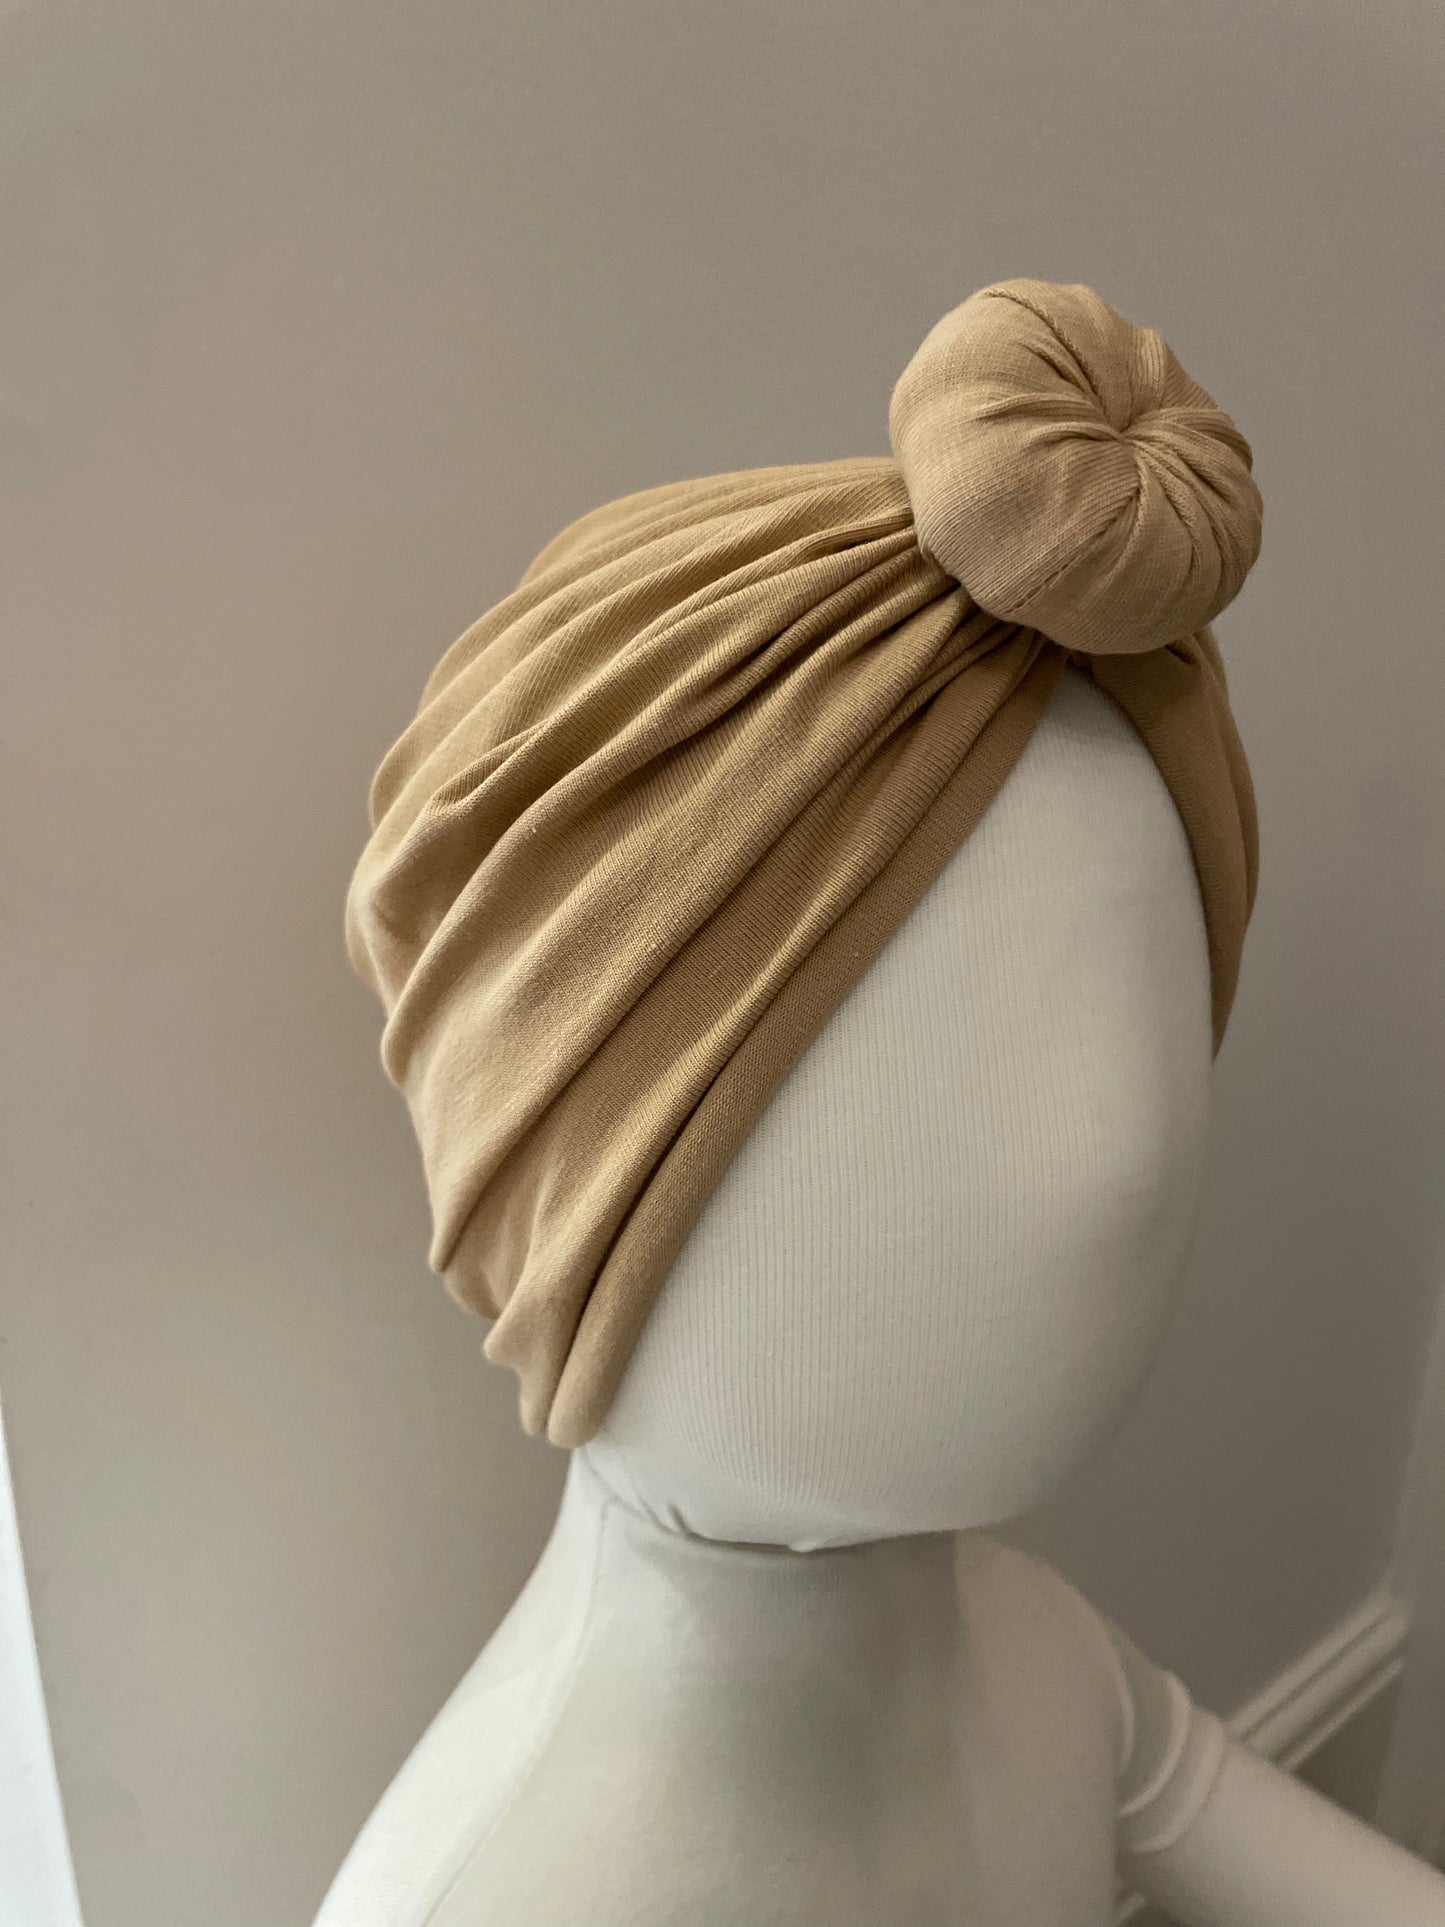 Organic cotton turbans